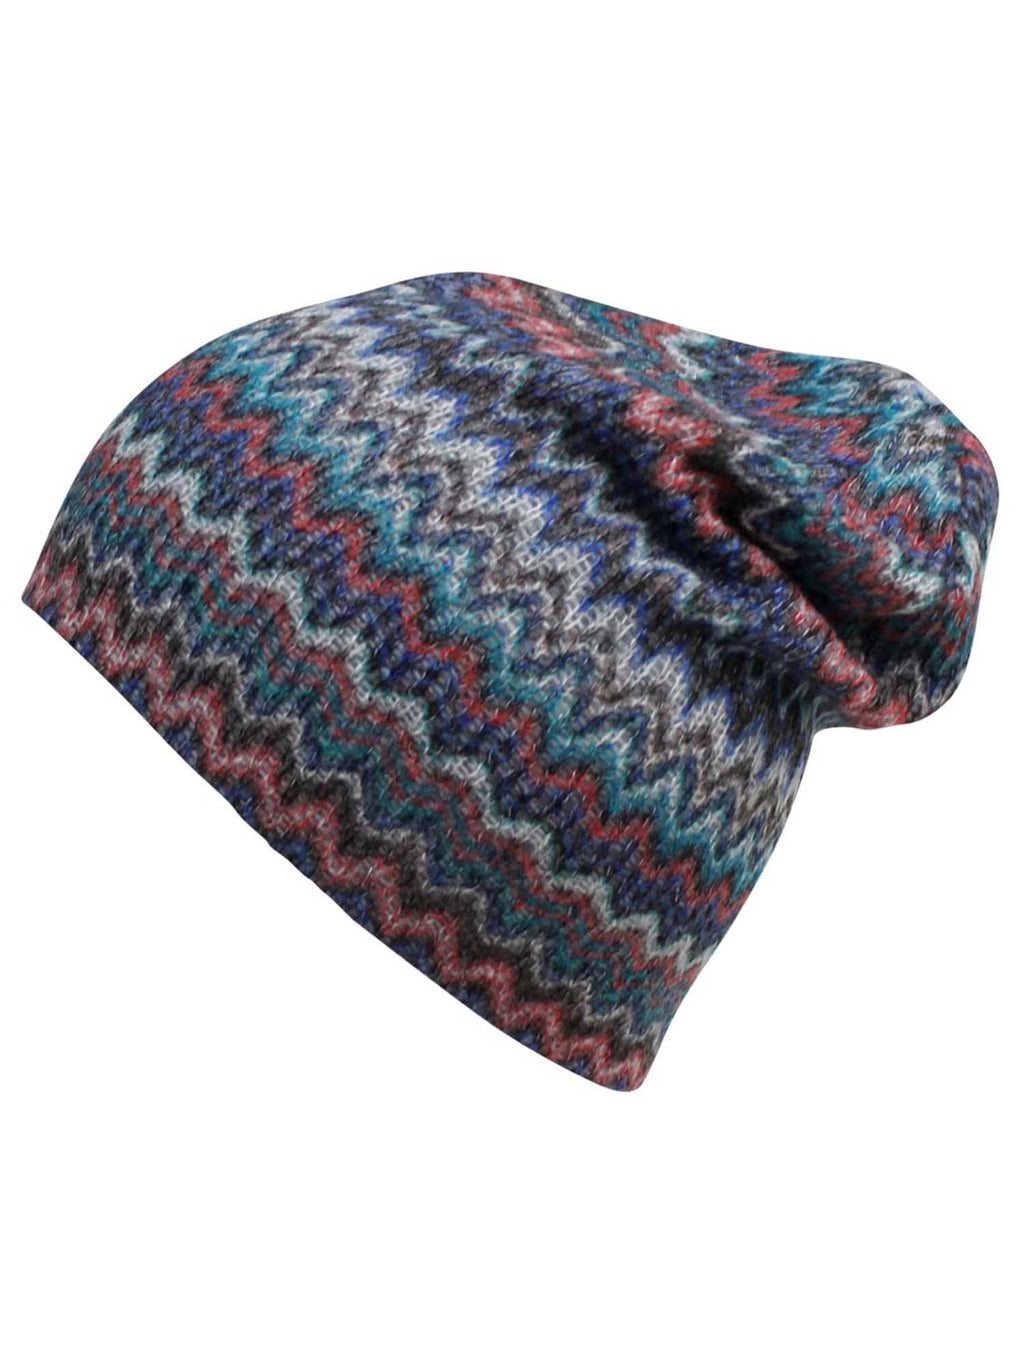 Pink & Blue Chevron Stripe Knit Slouchy Beanie Cap Hat